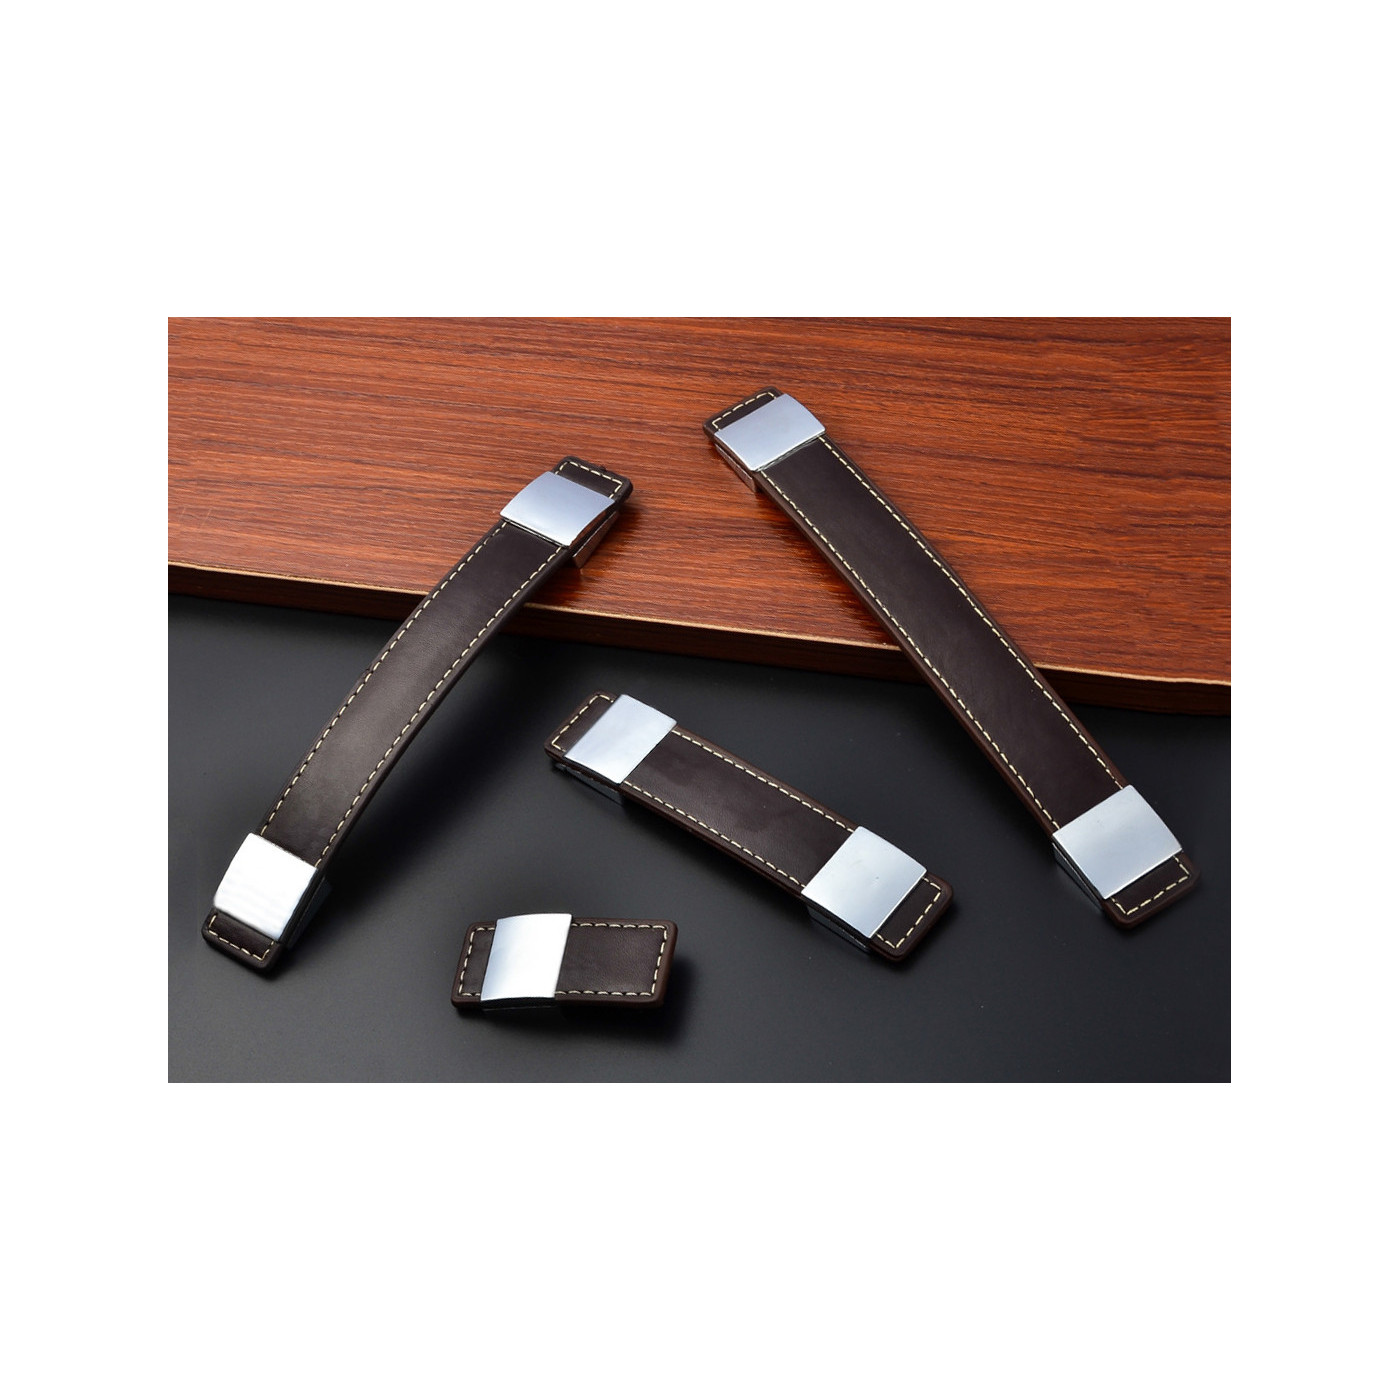 Conjunto de 4 puxadores para móveis de couro, marrom escuro